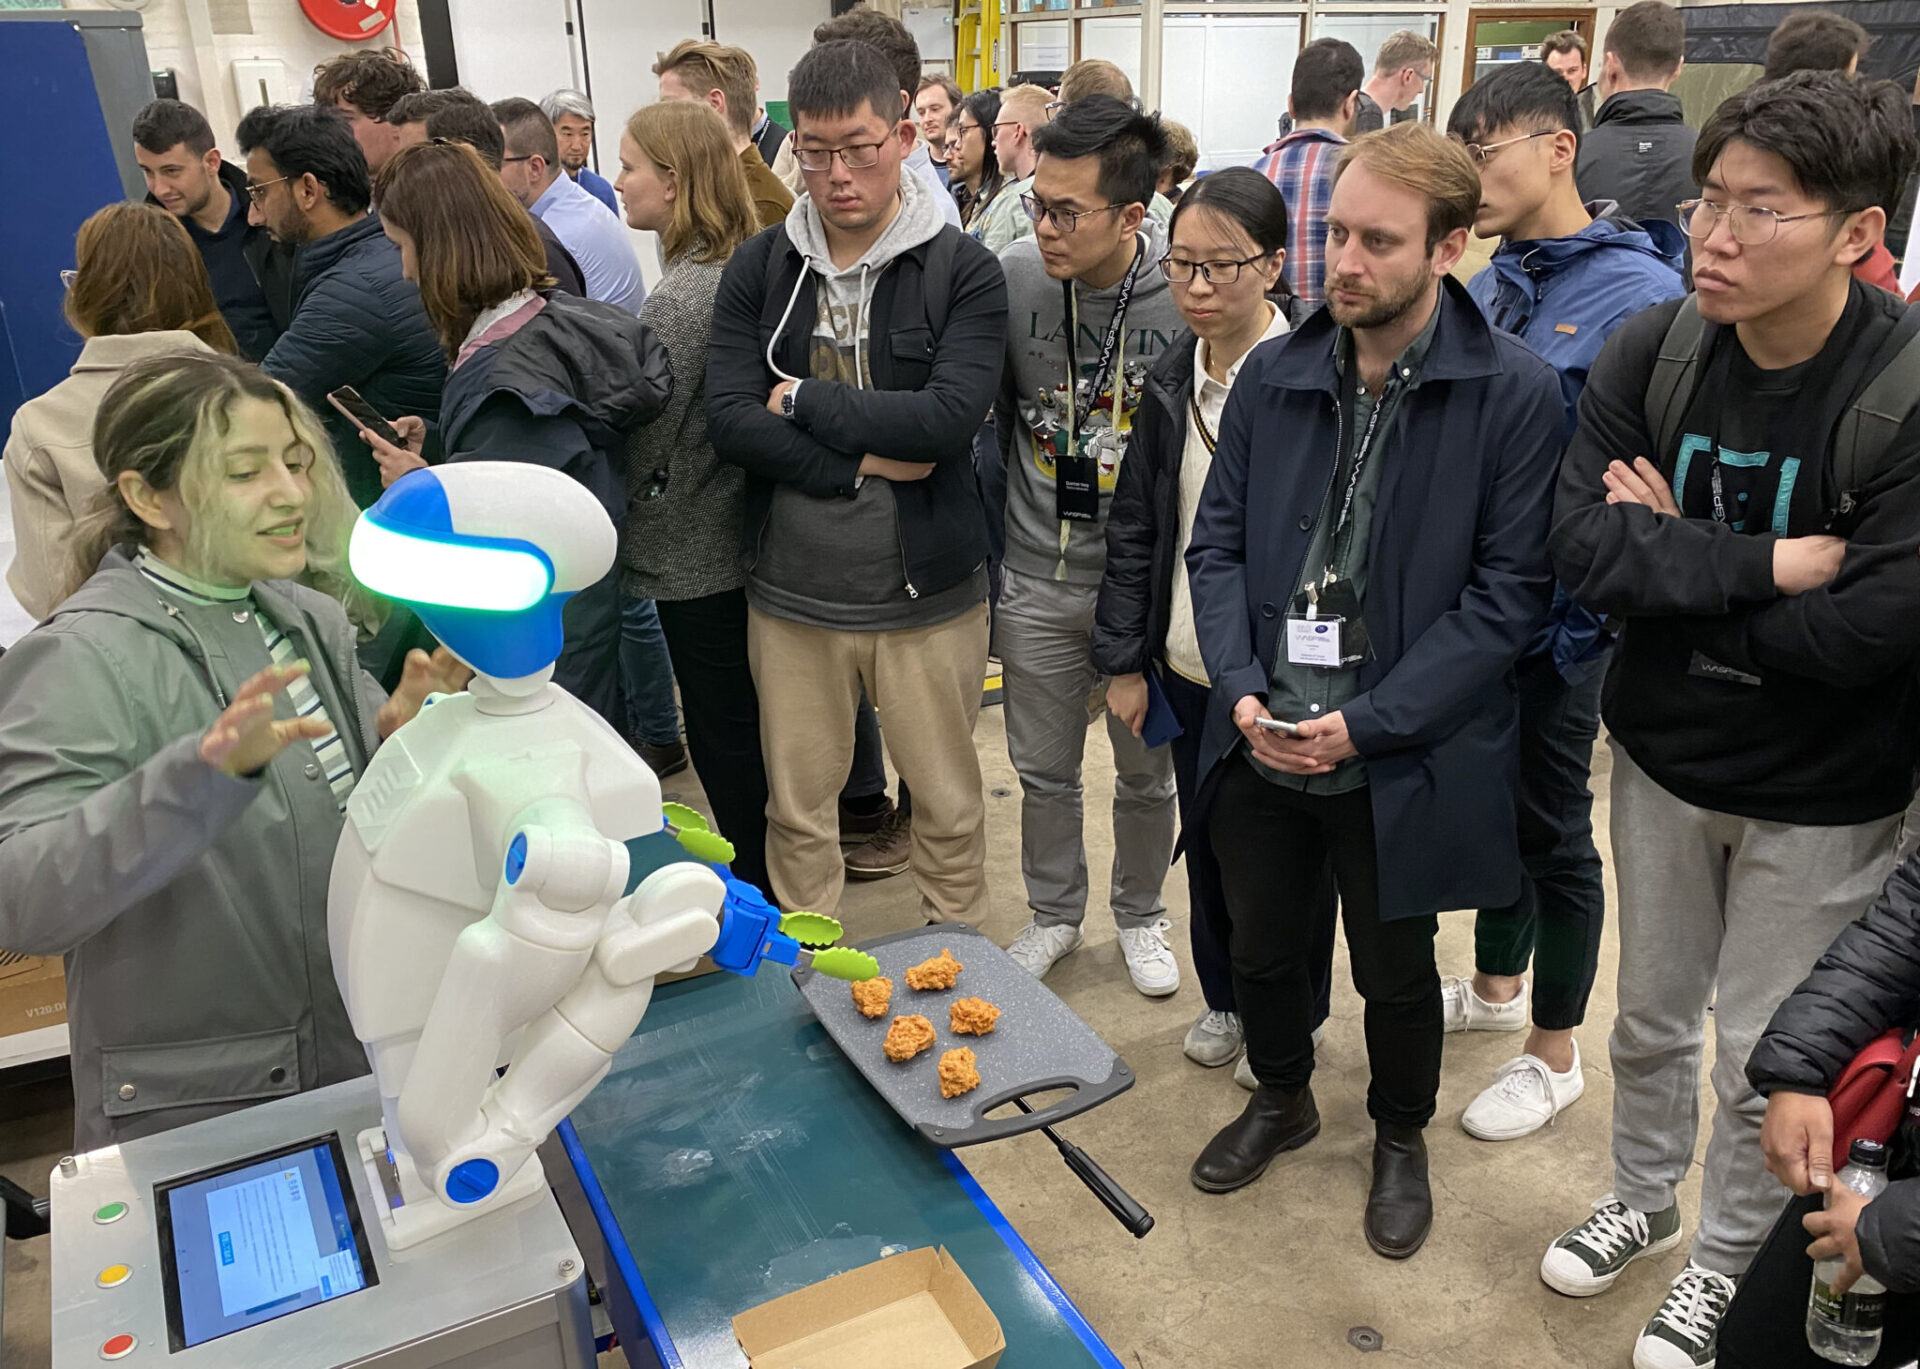 Showcasing of robotics at Cambridge University lab